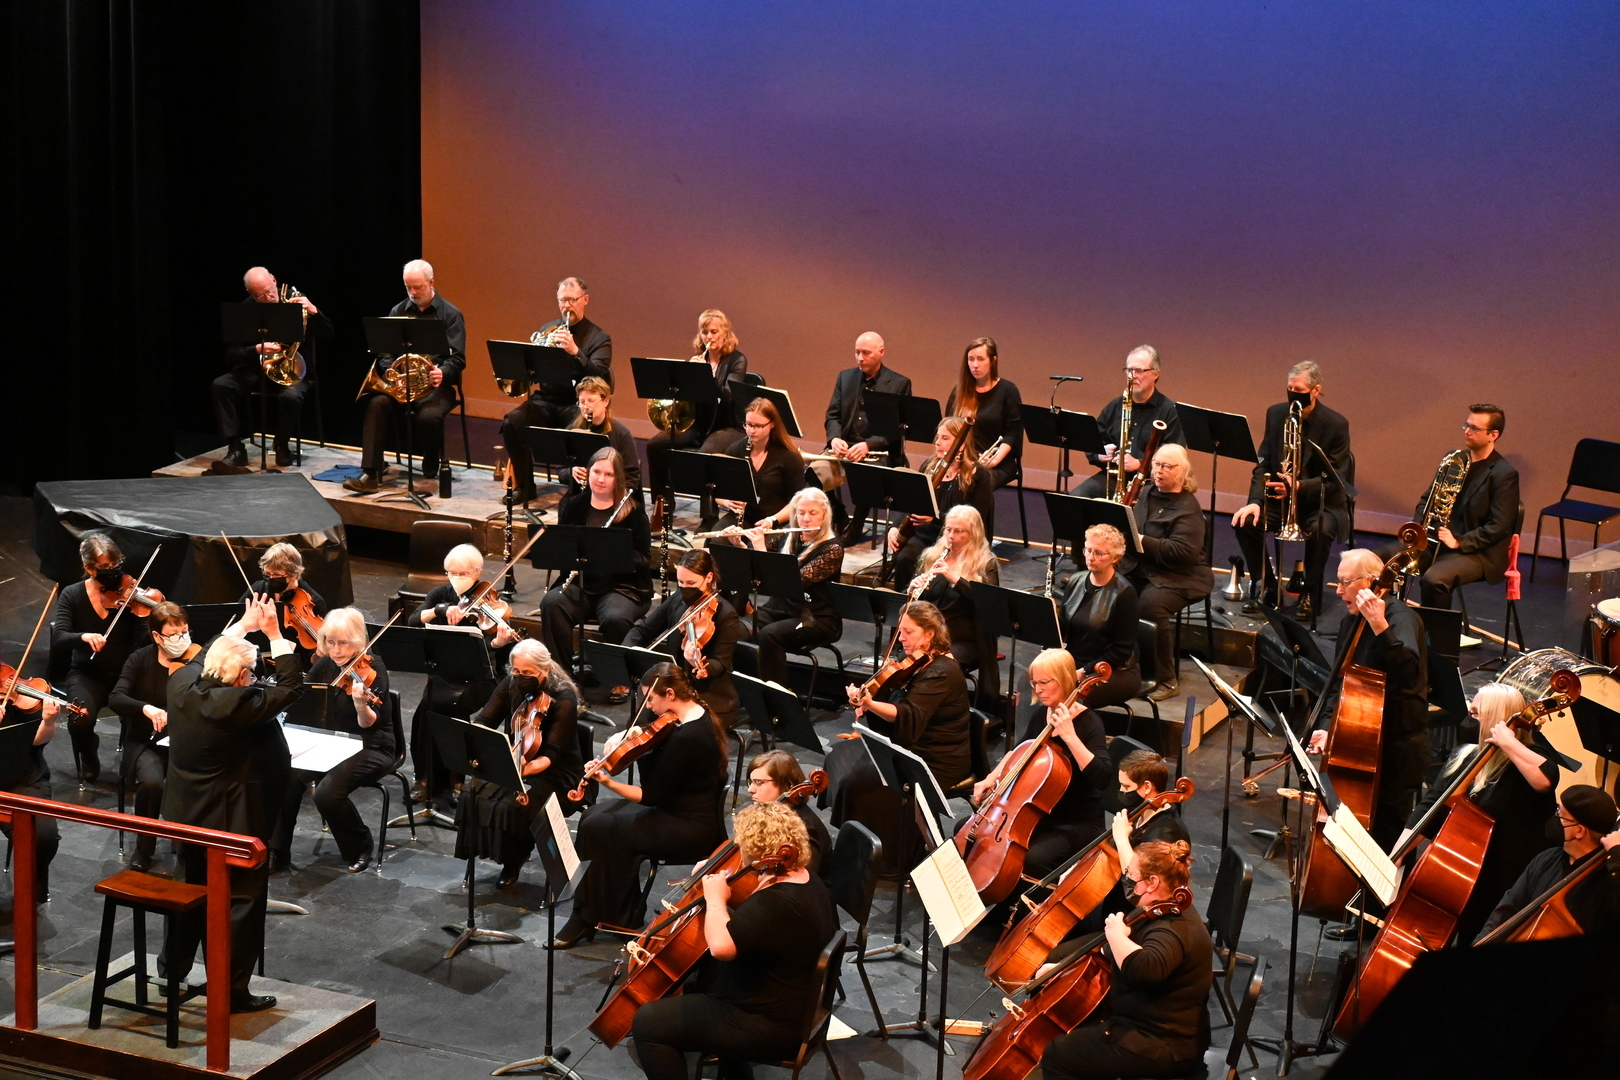 Willamette Valley Symphony Concert, Corvallis, Oregon, United States